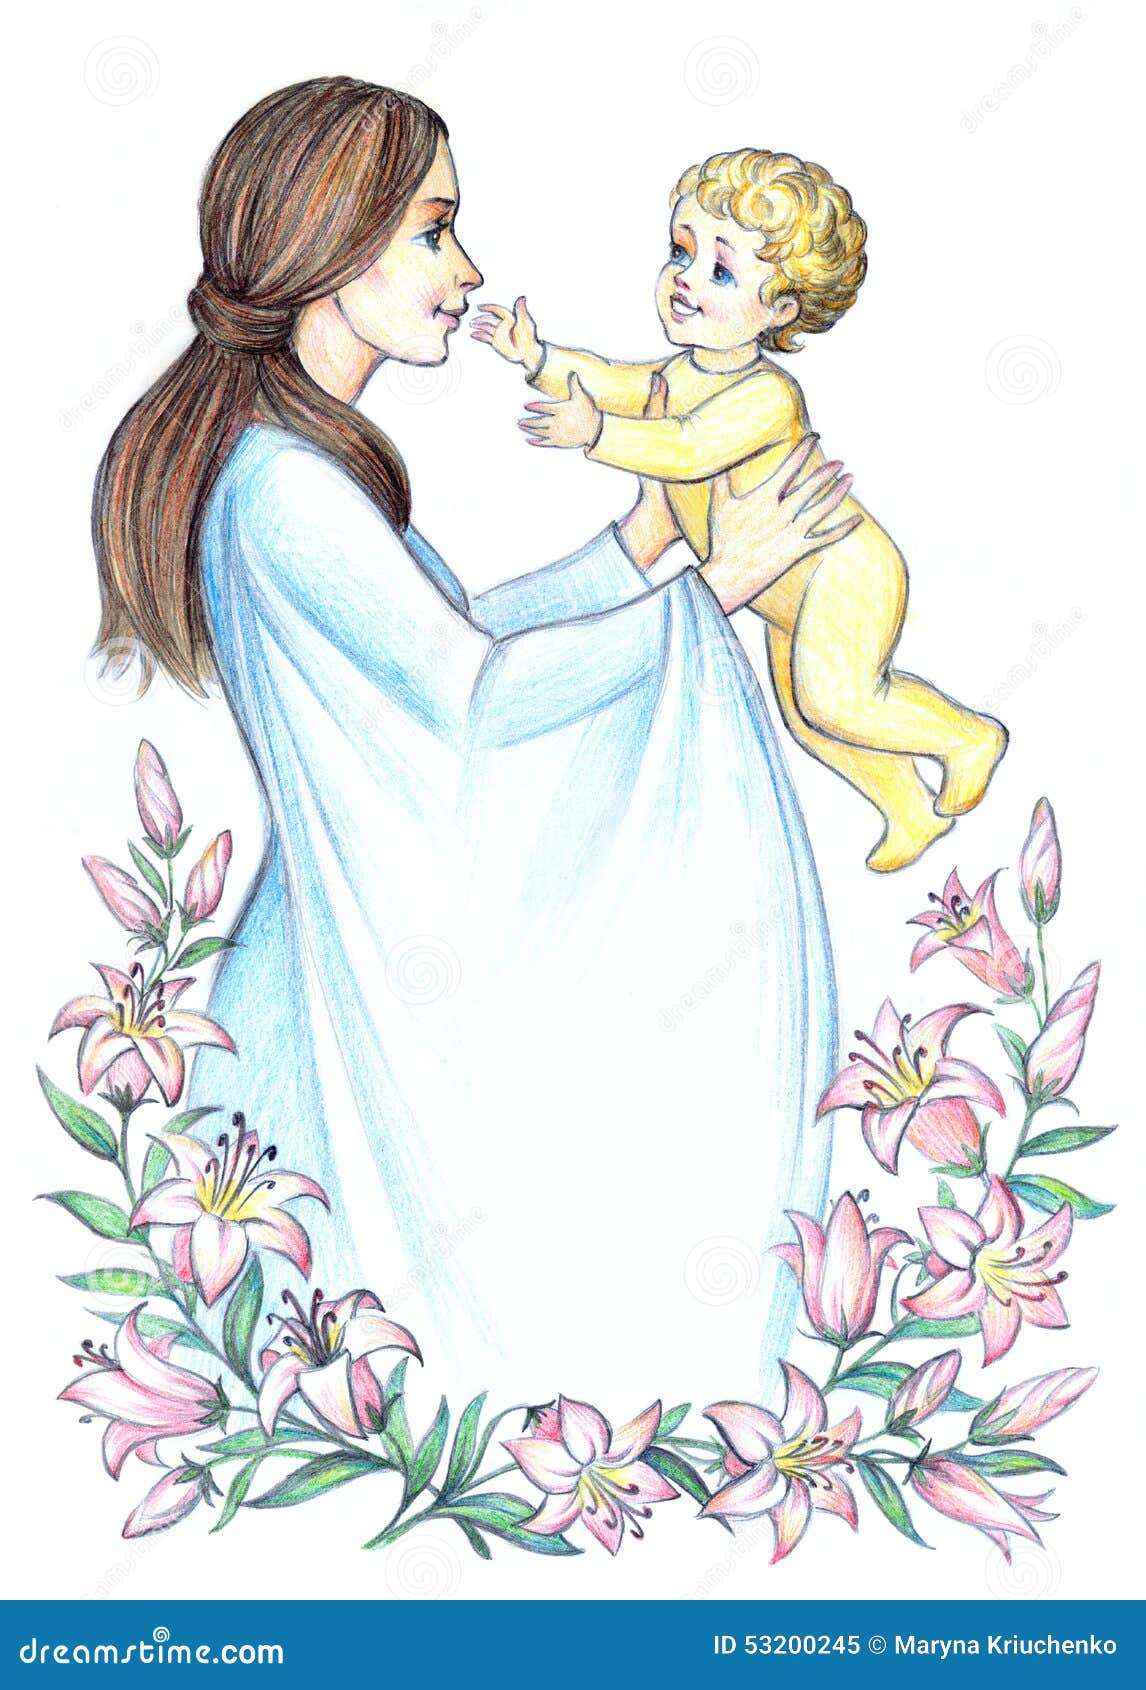 Мамочка с младенцем на руках рисунок